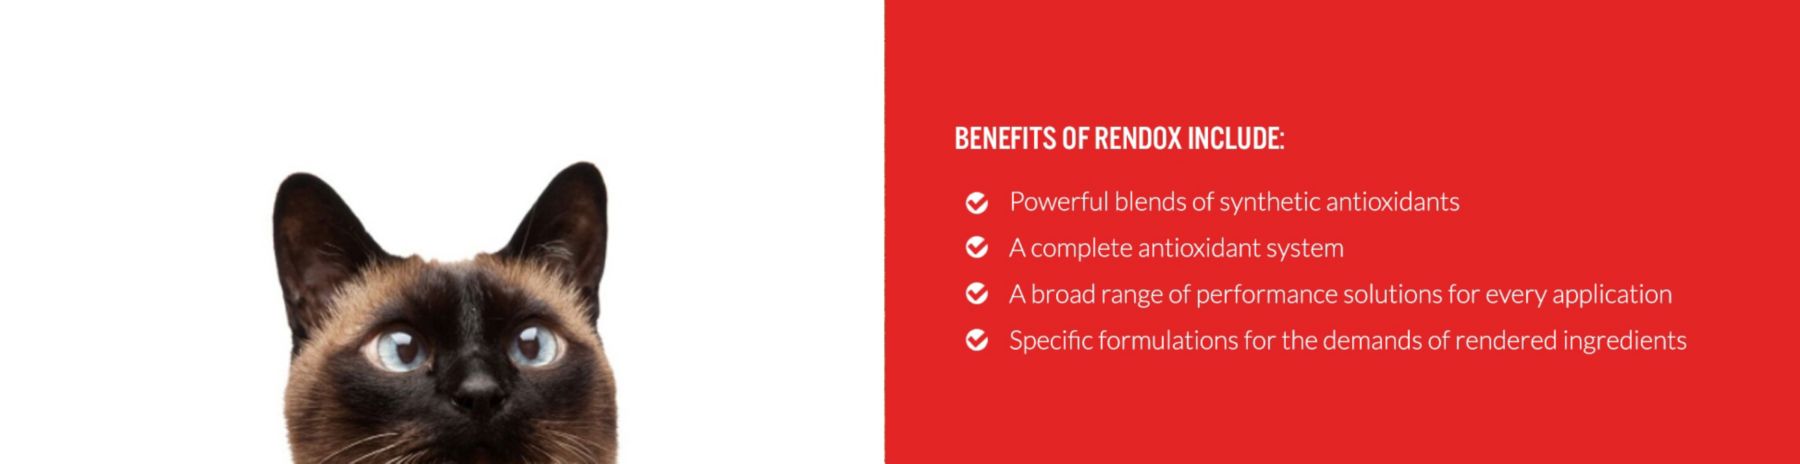 rendox-benefits_1